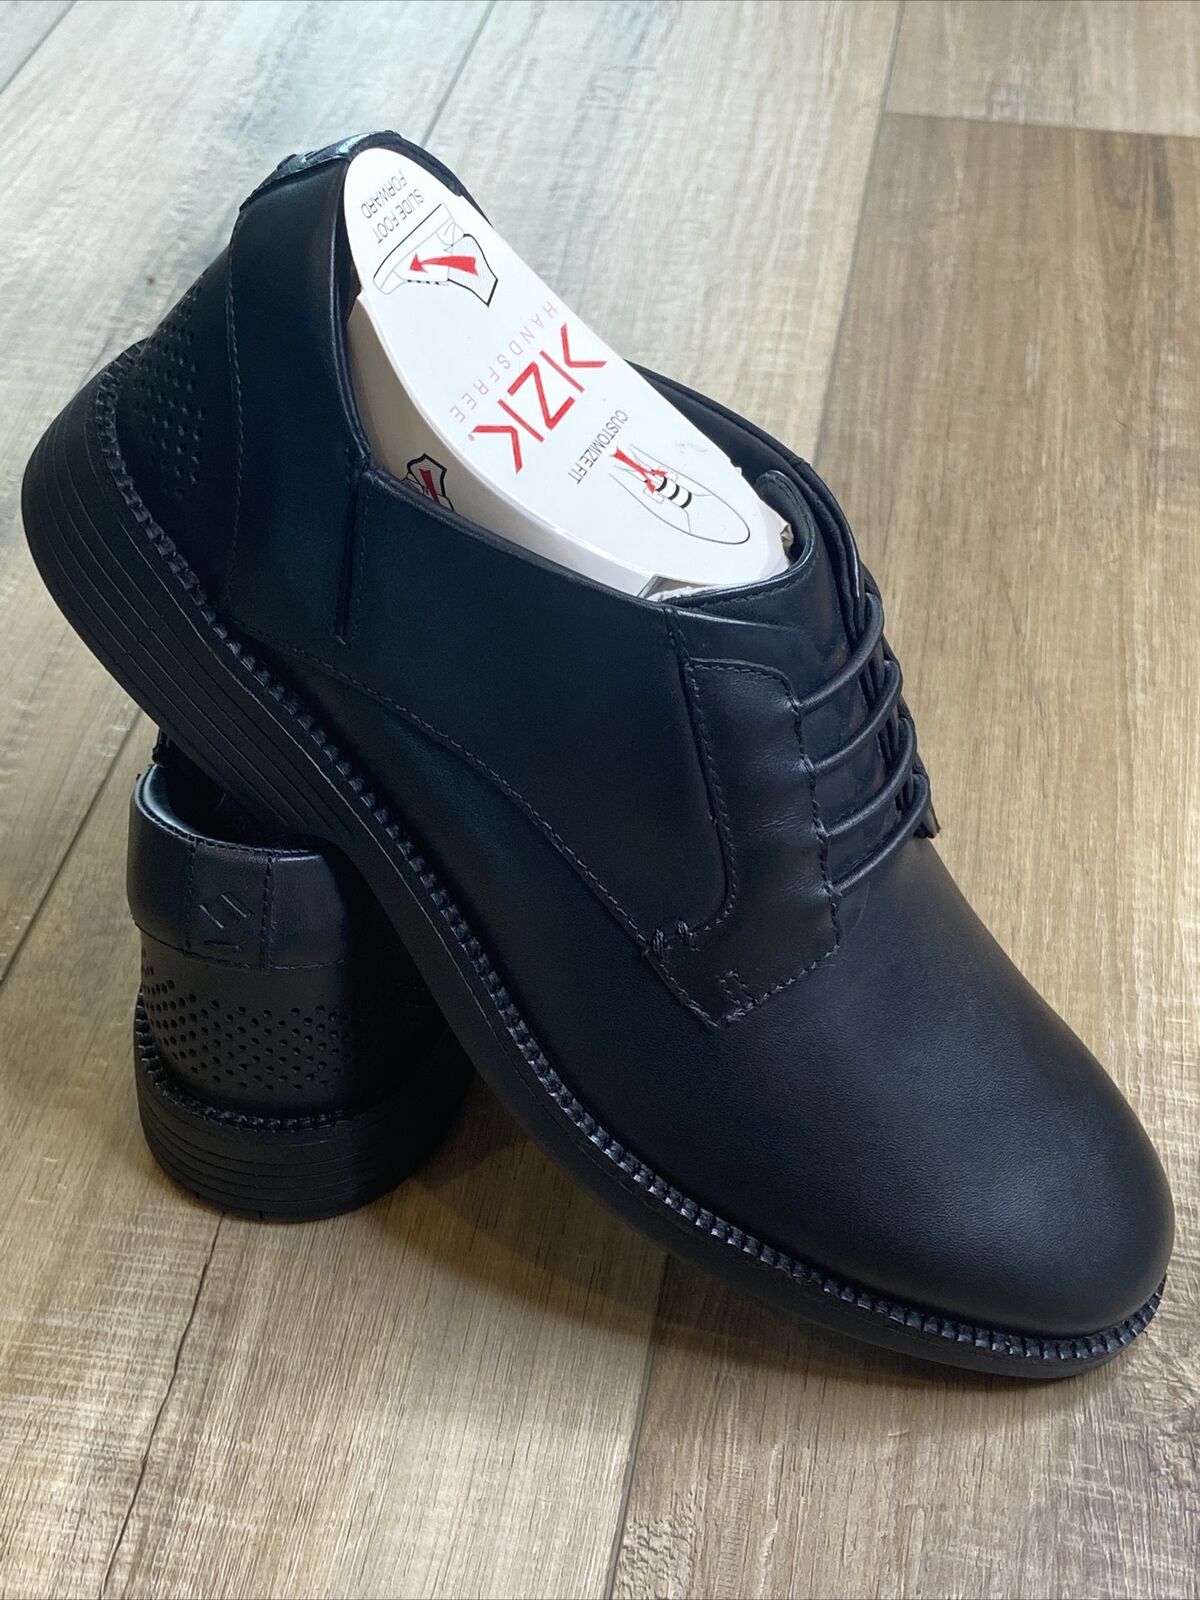 KZK Dealing full price reduction handsfree customize fit mens dress shoes size 10 Black Le M Columbus Mall